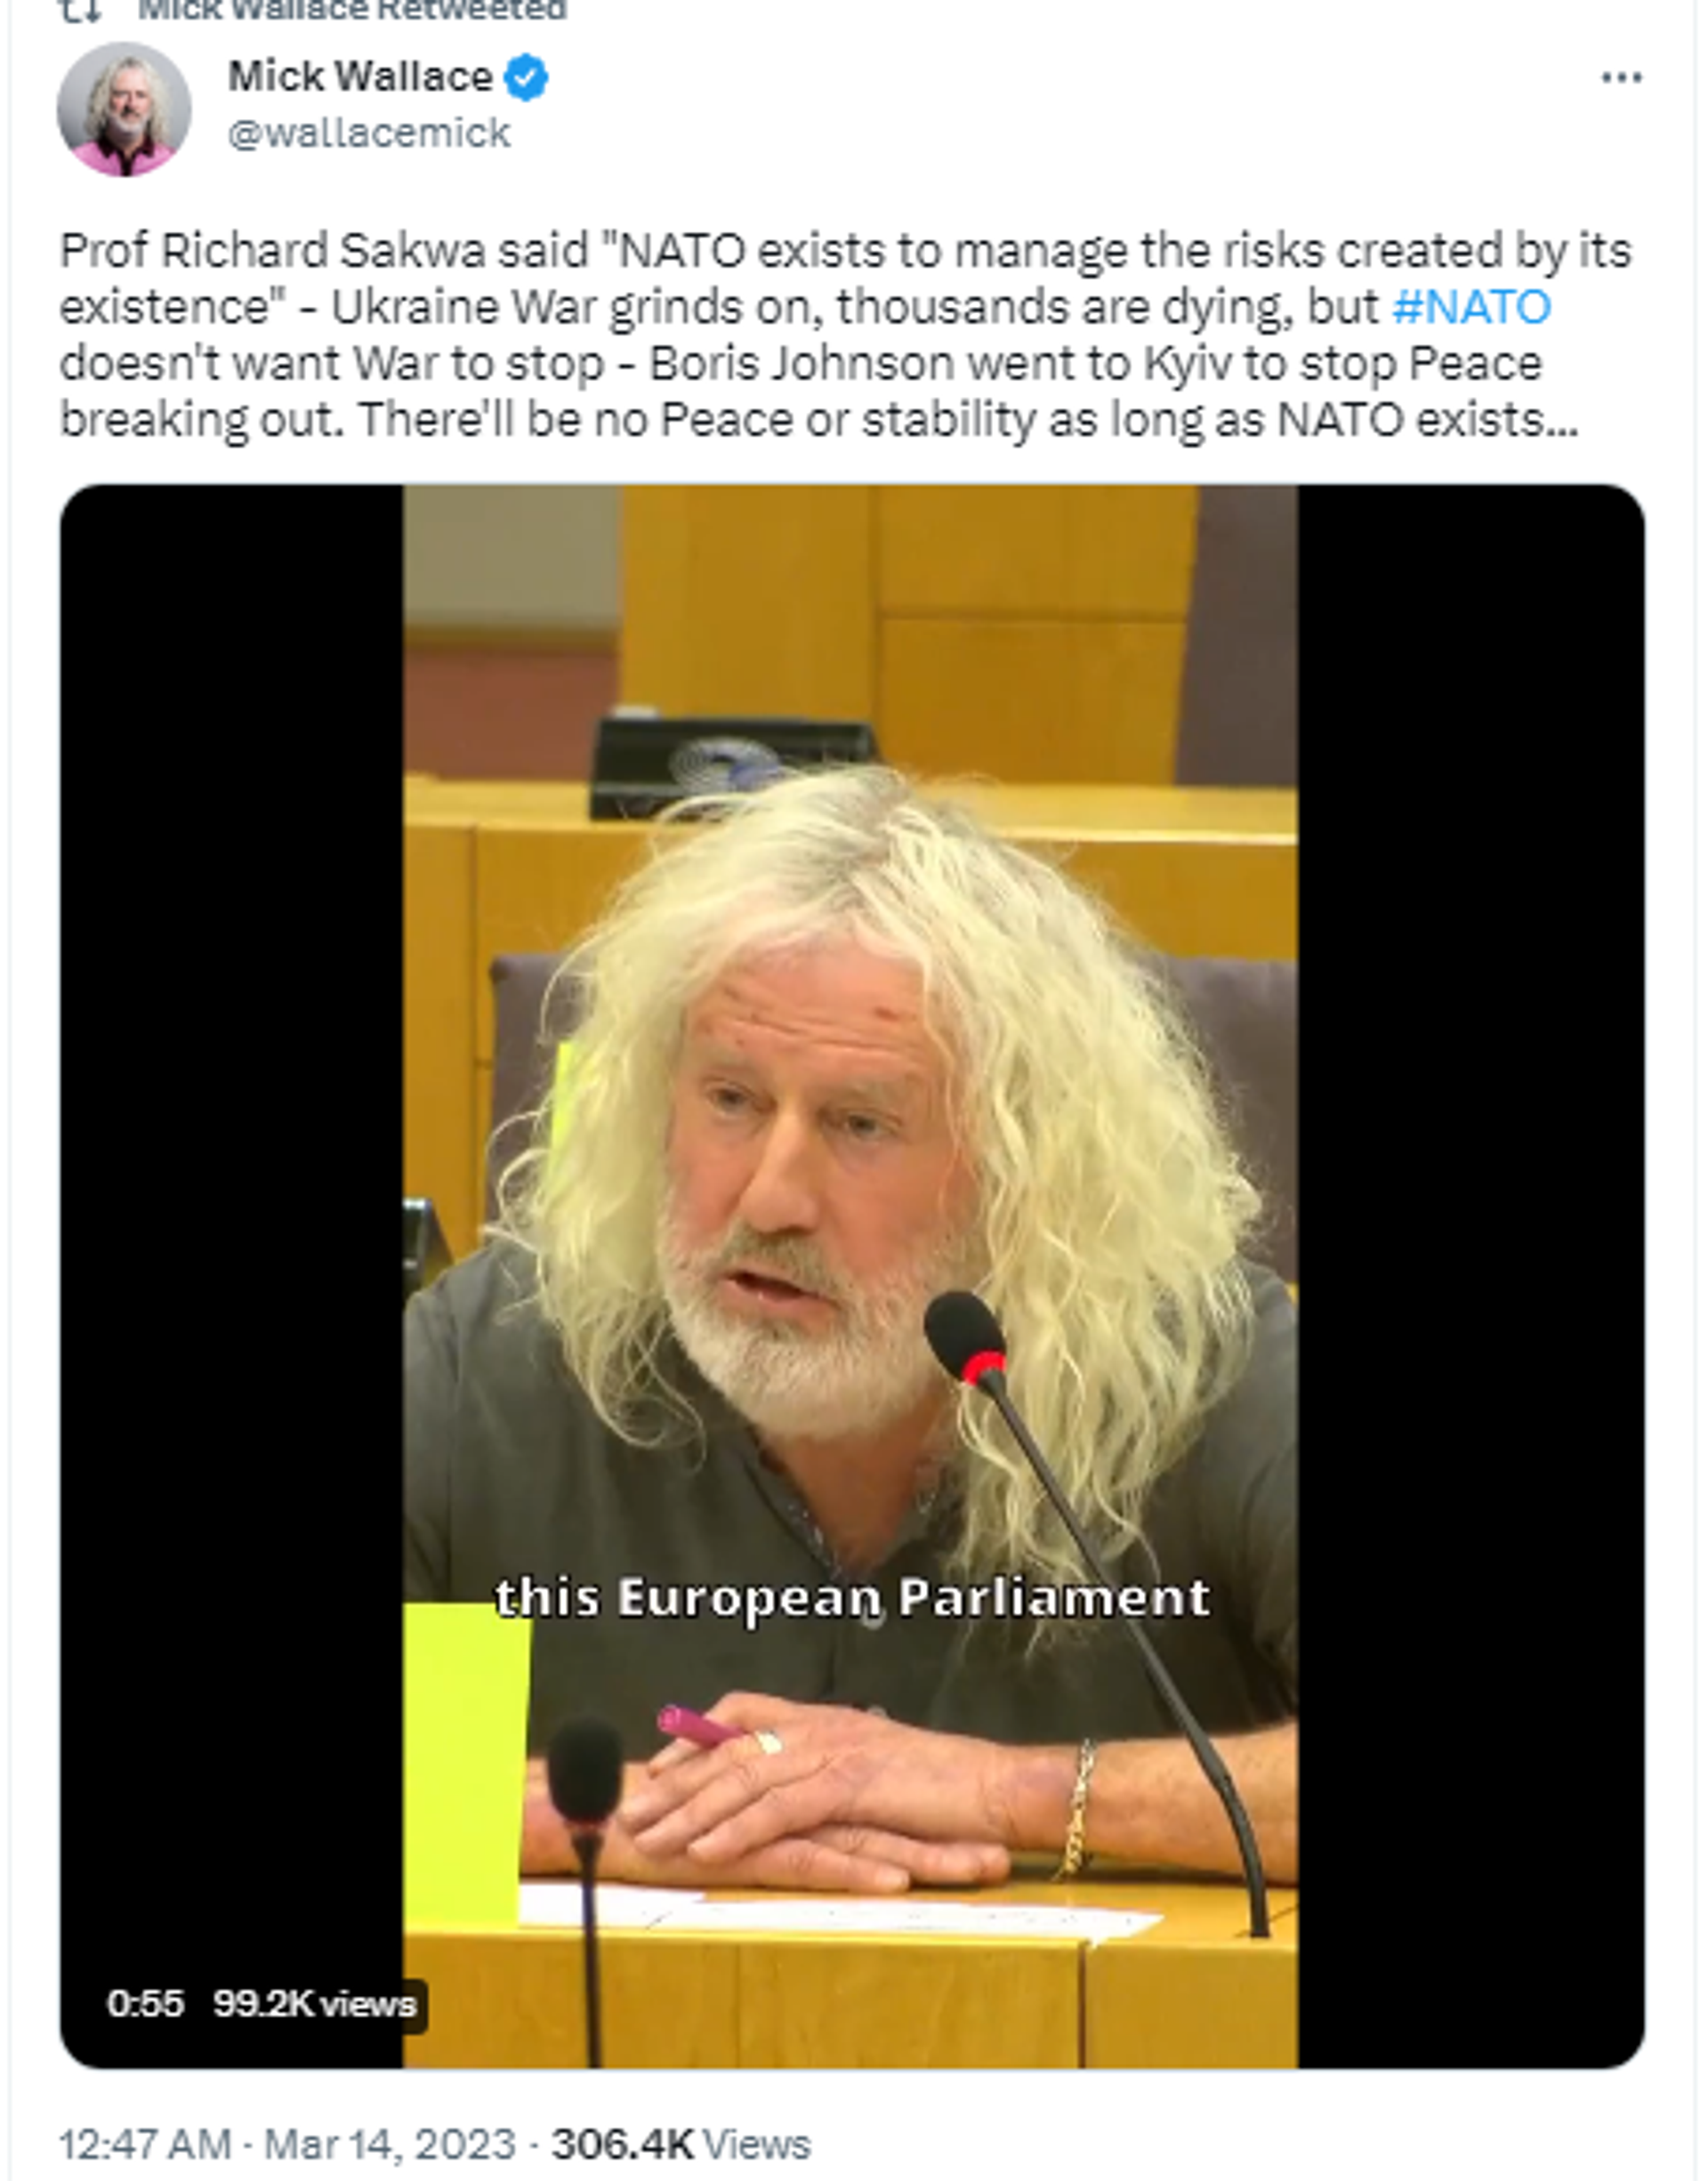 Screenshot of Twitter post by Michael Wallace, an Irish politician and a Member of the European Parliament (MEP) from Ireland. - Sputnik International, 1920, 19.03.2023